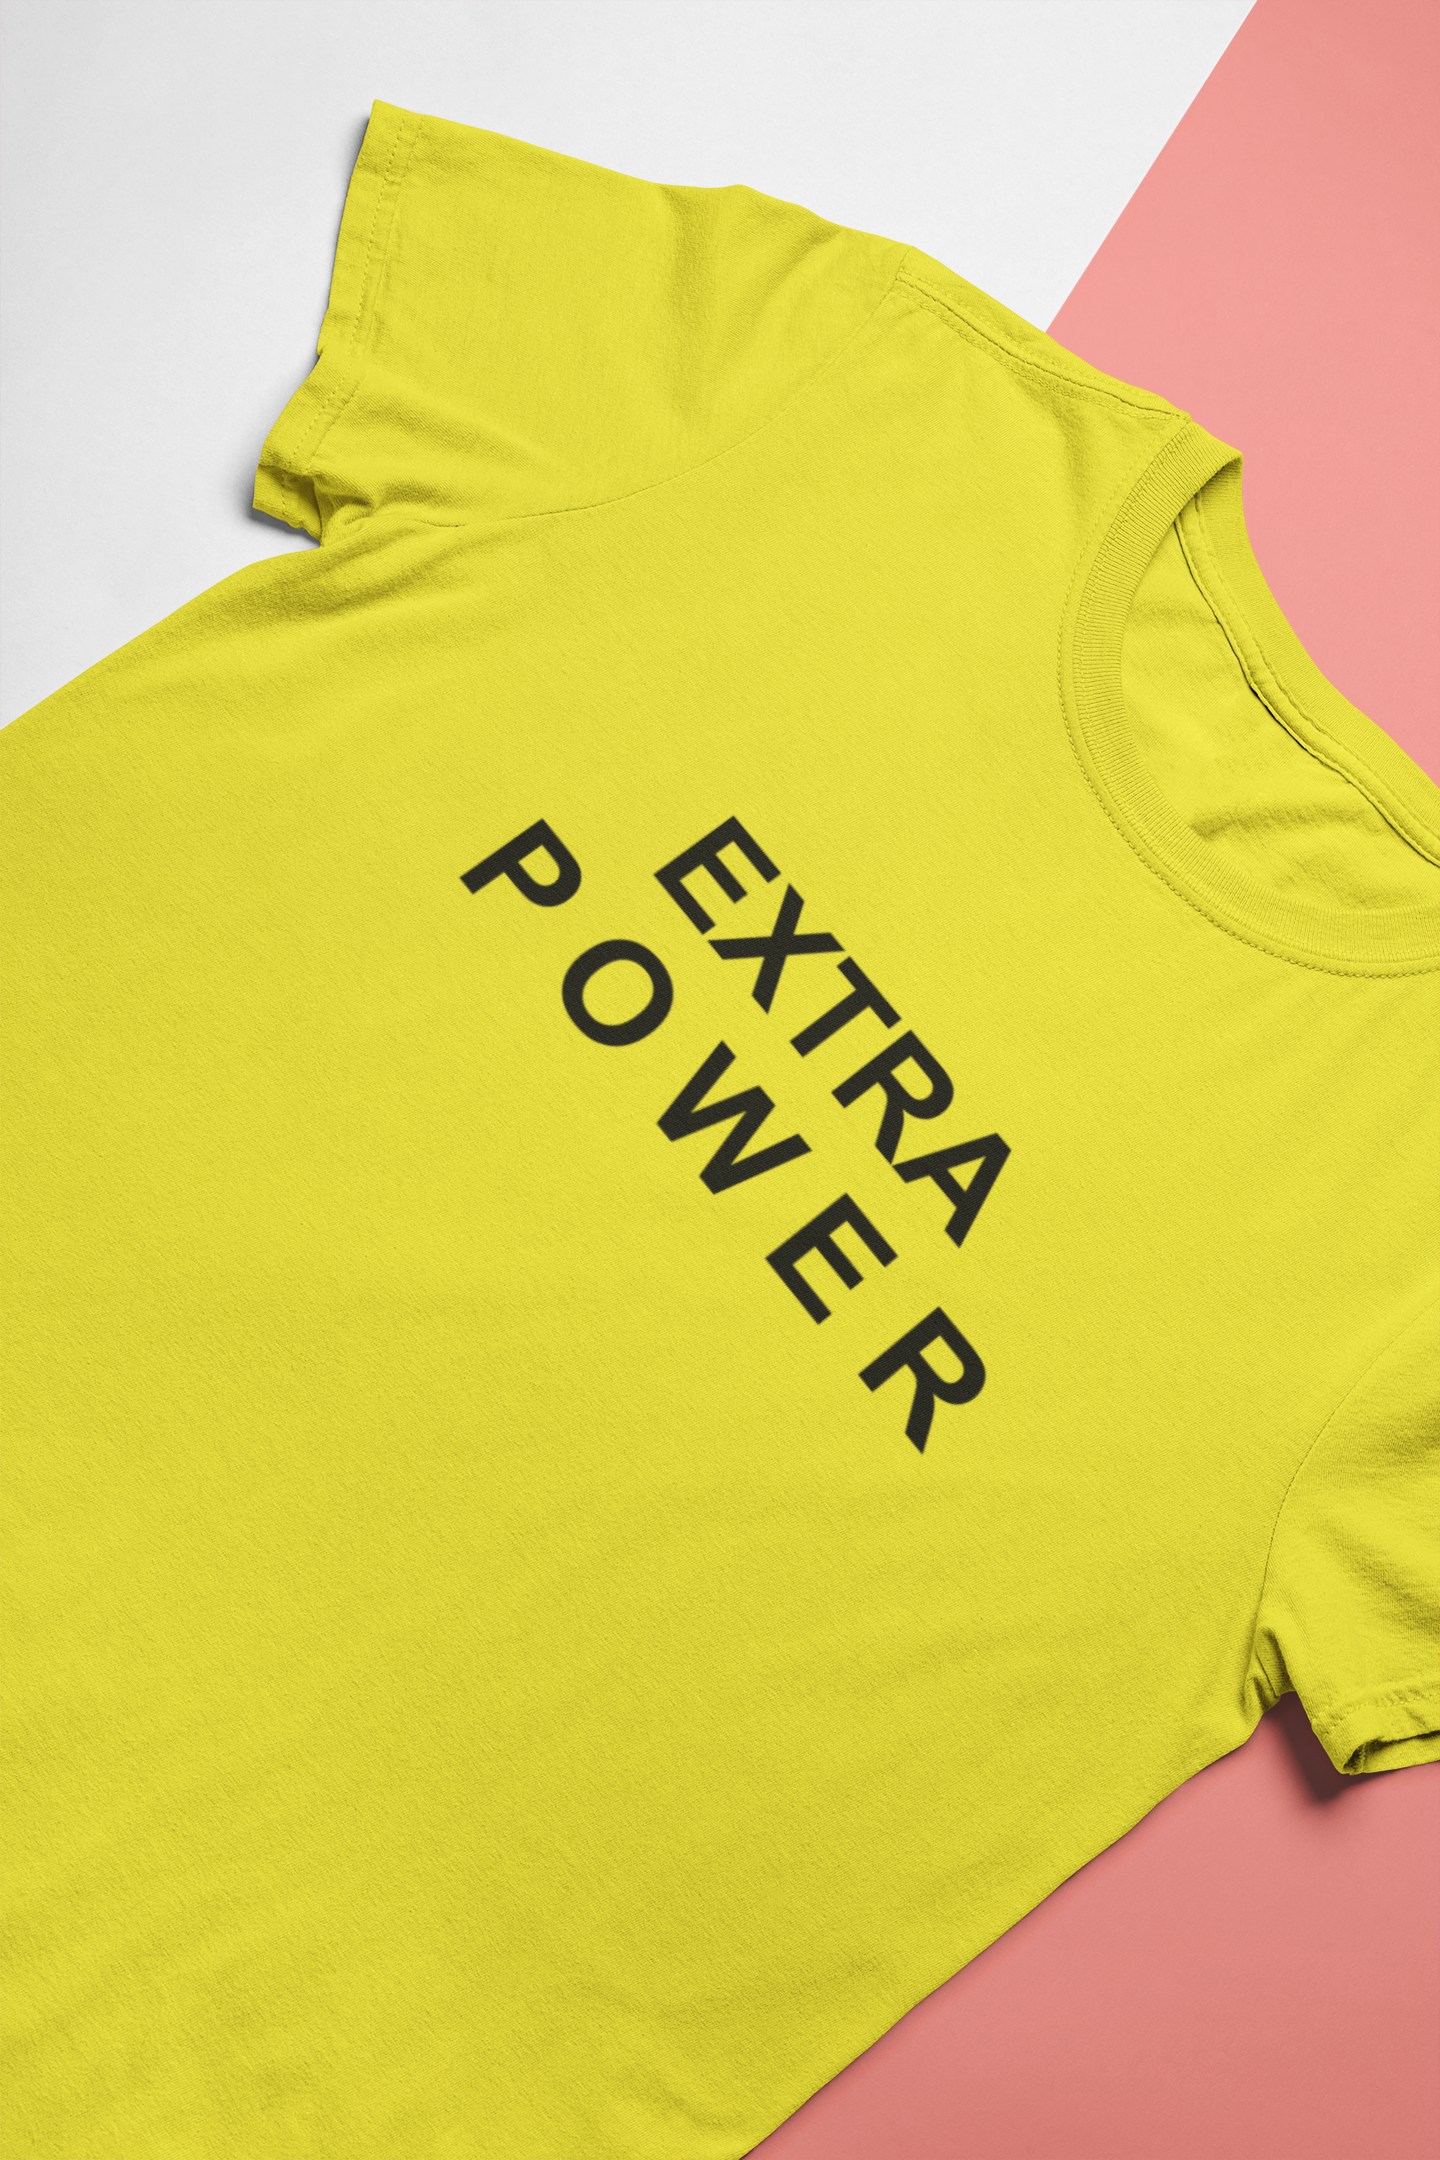 Extra Power Parineeti Chopra Celebrity T-shirt- FunkyTeesClub